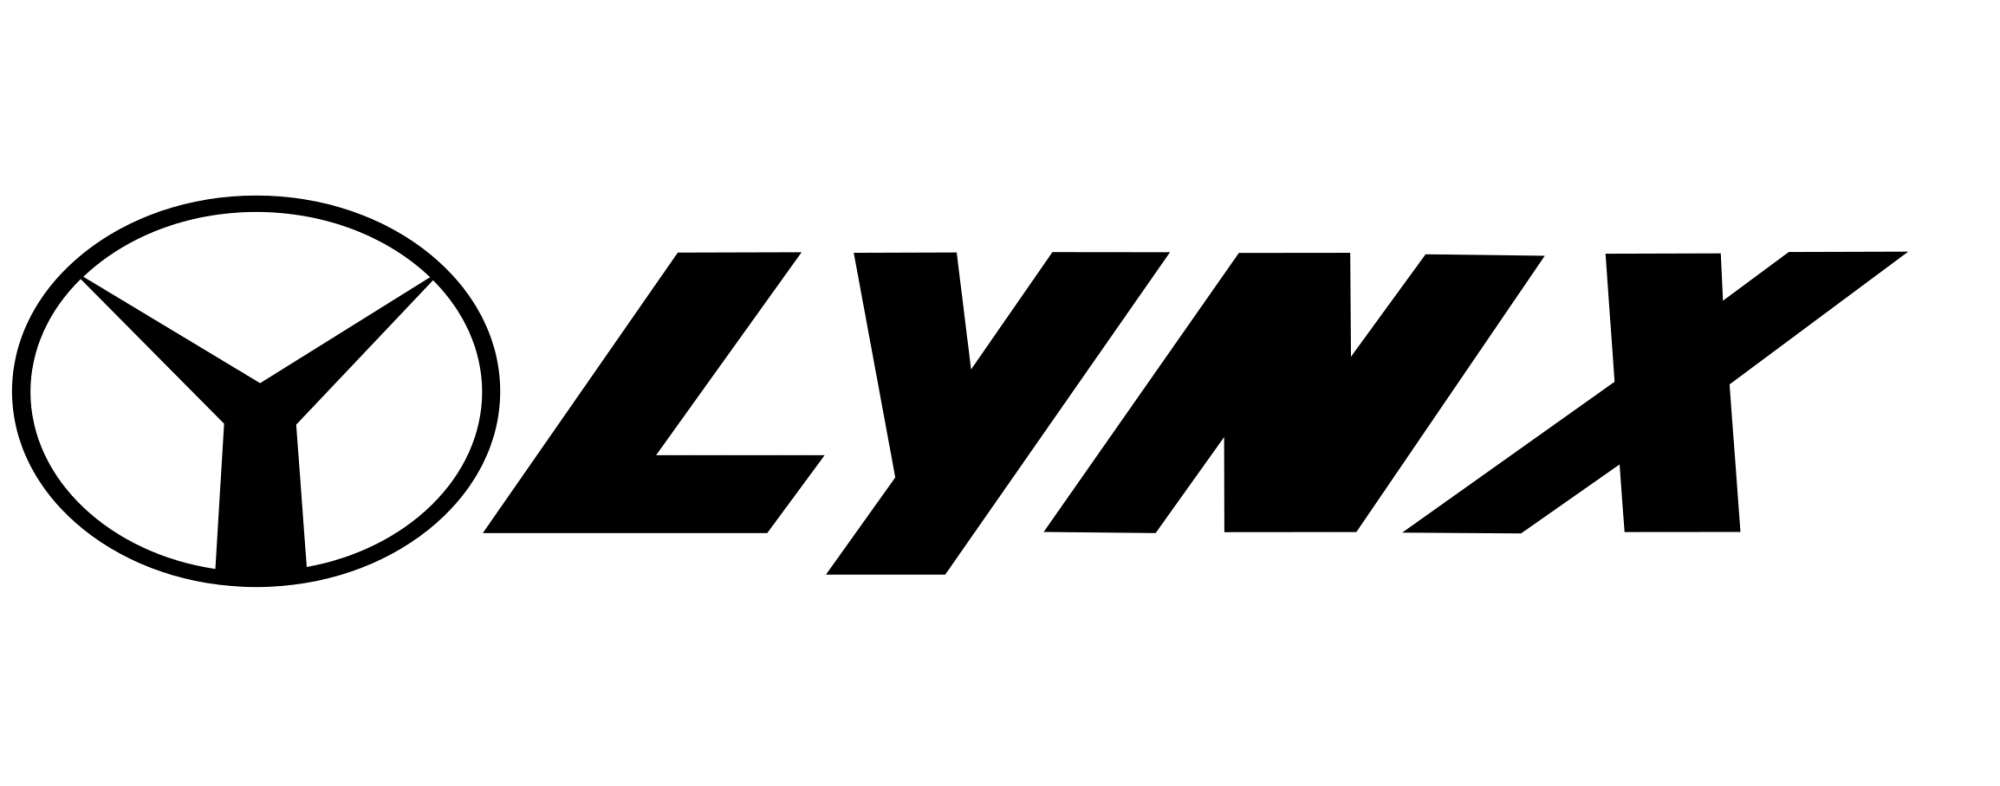 LYNX